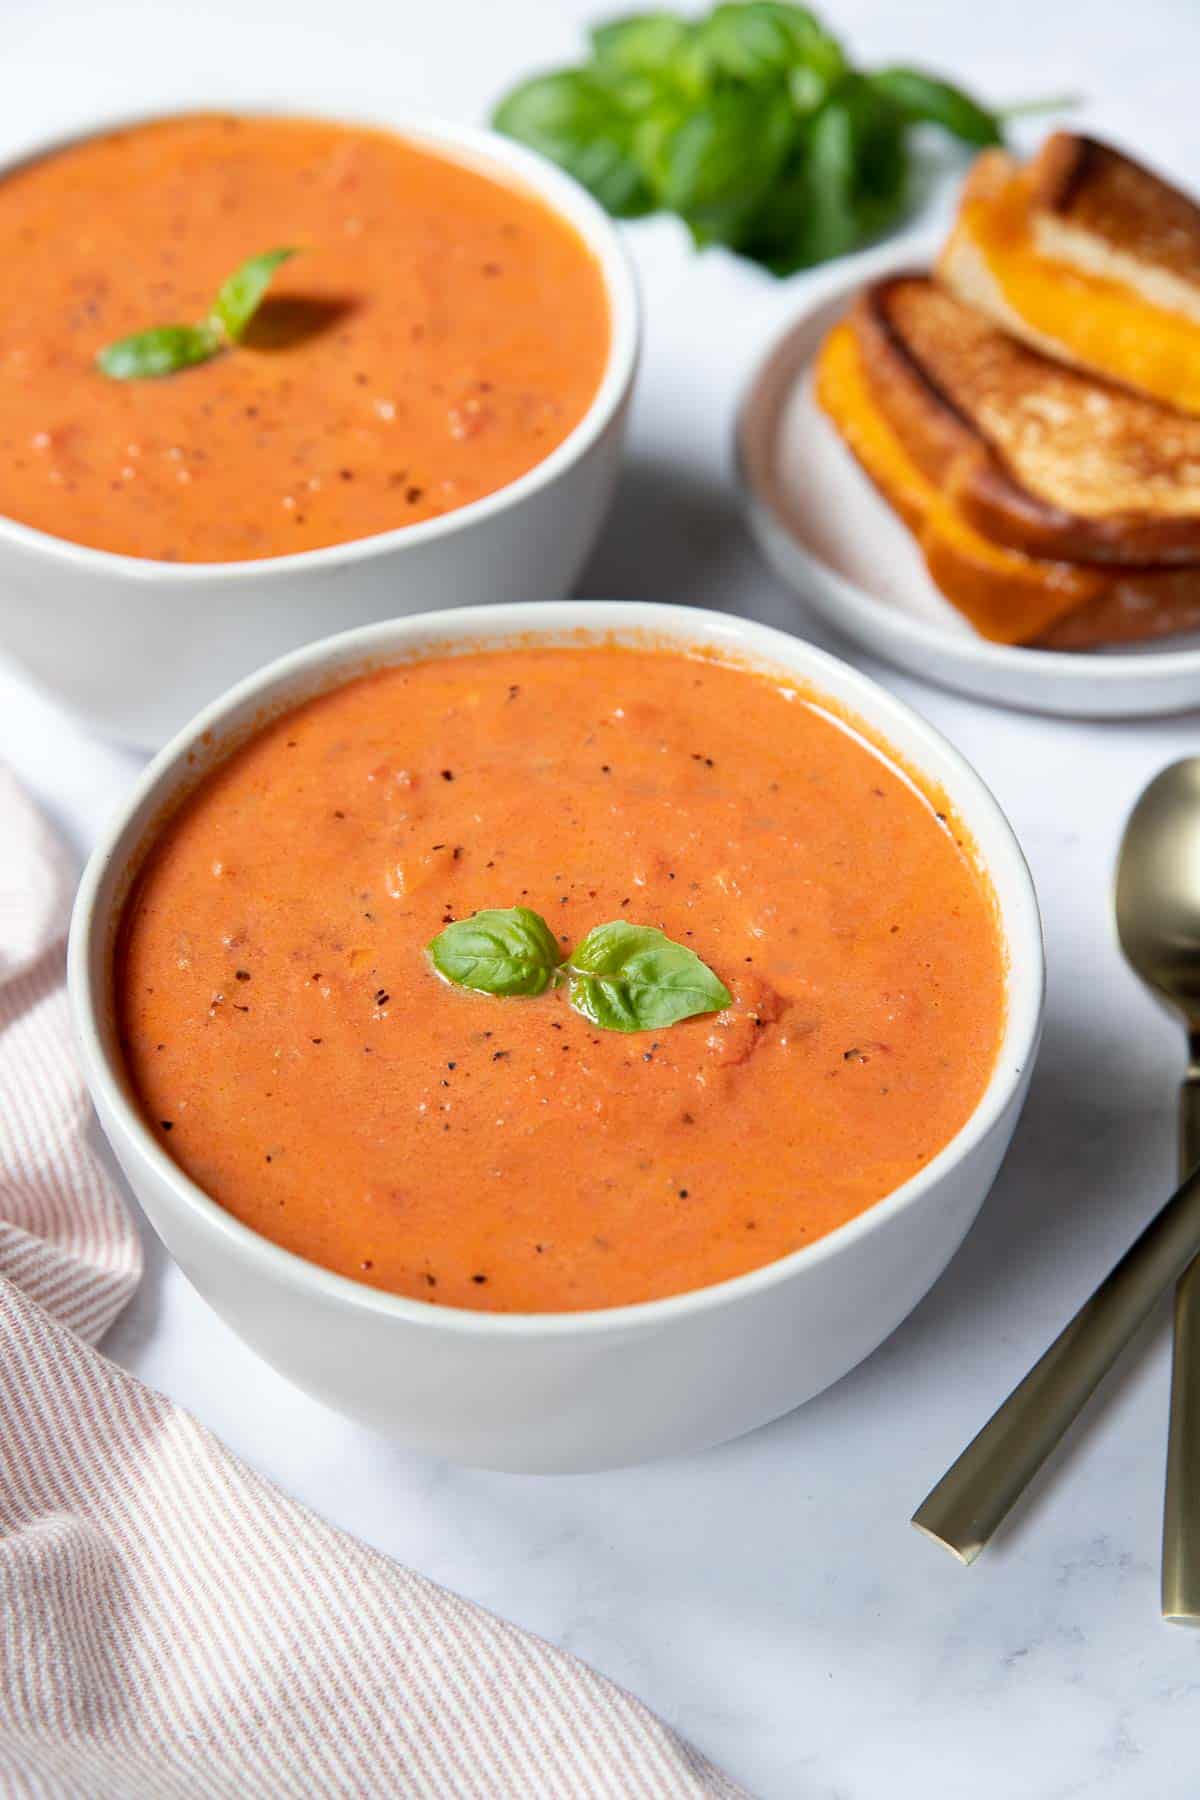 https://www.dessertfortwo.com/wp-content/uploads/2021/01/instant-pot-tomato-soup-9.jpg